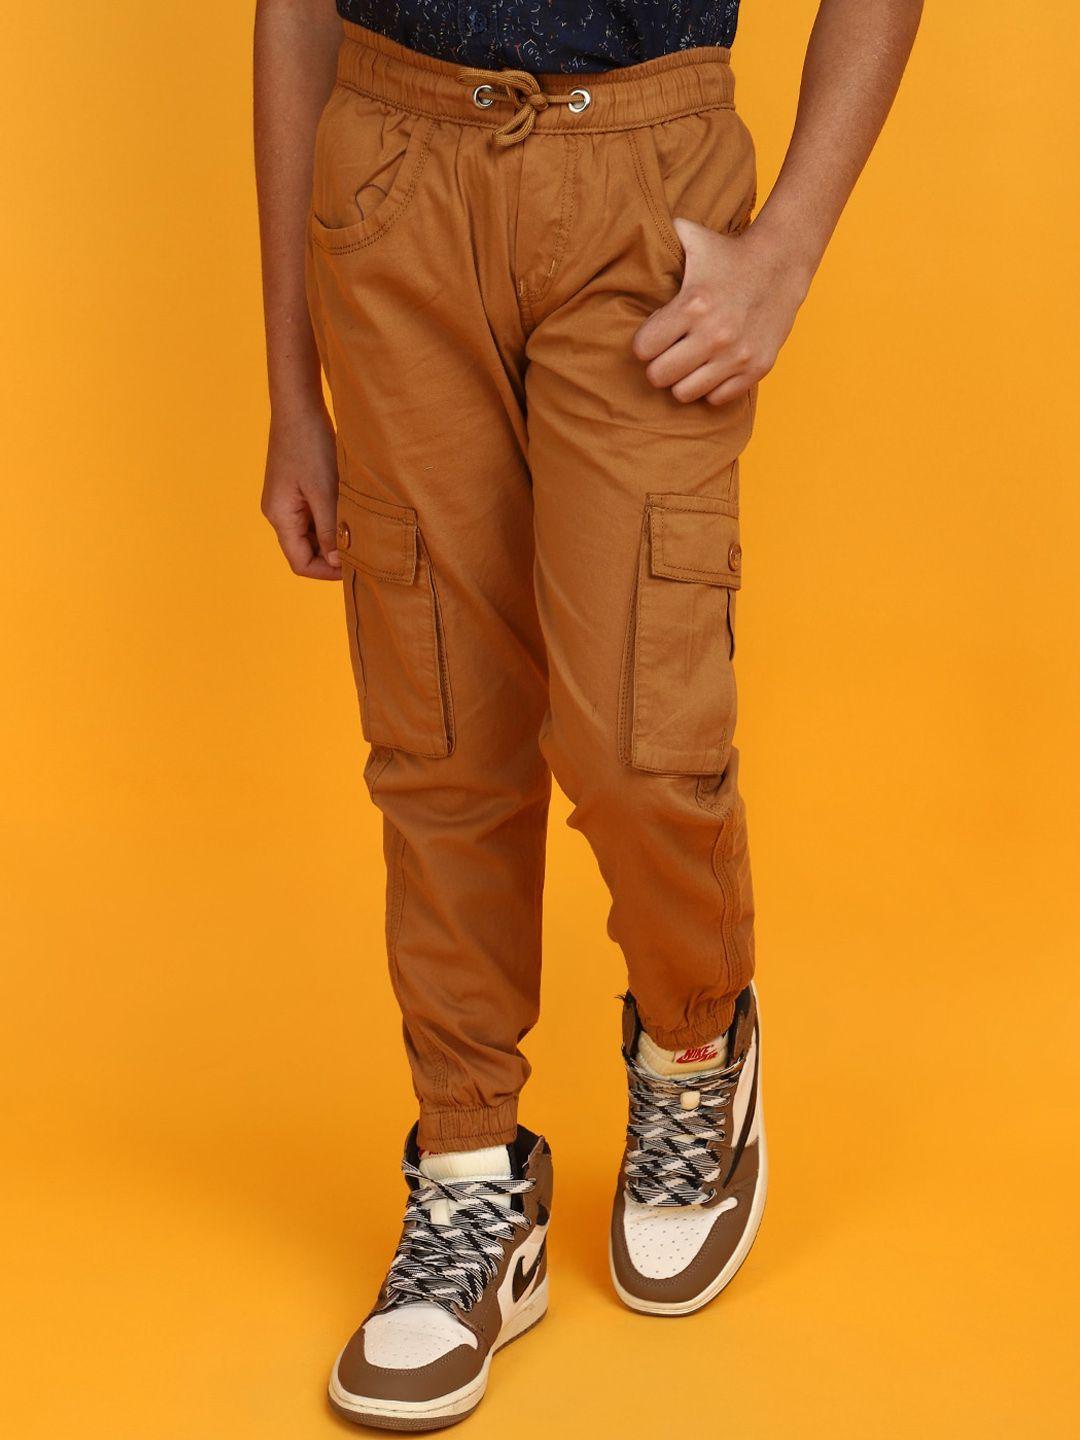 v-mart-boys-mid-rise-cotton-cargos-trouser